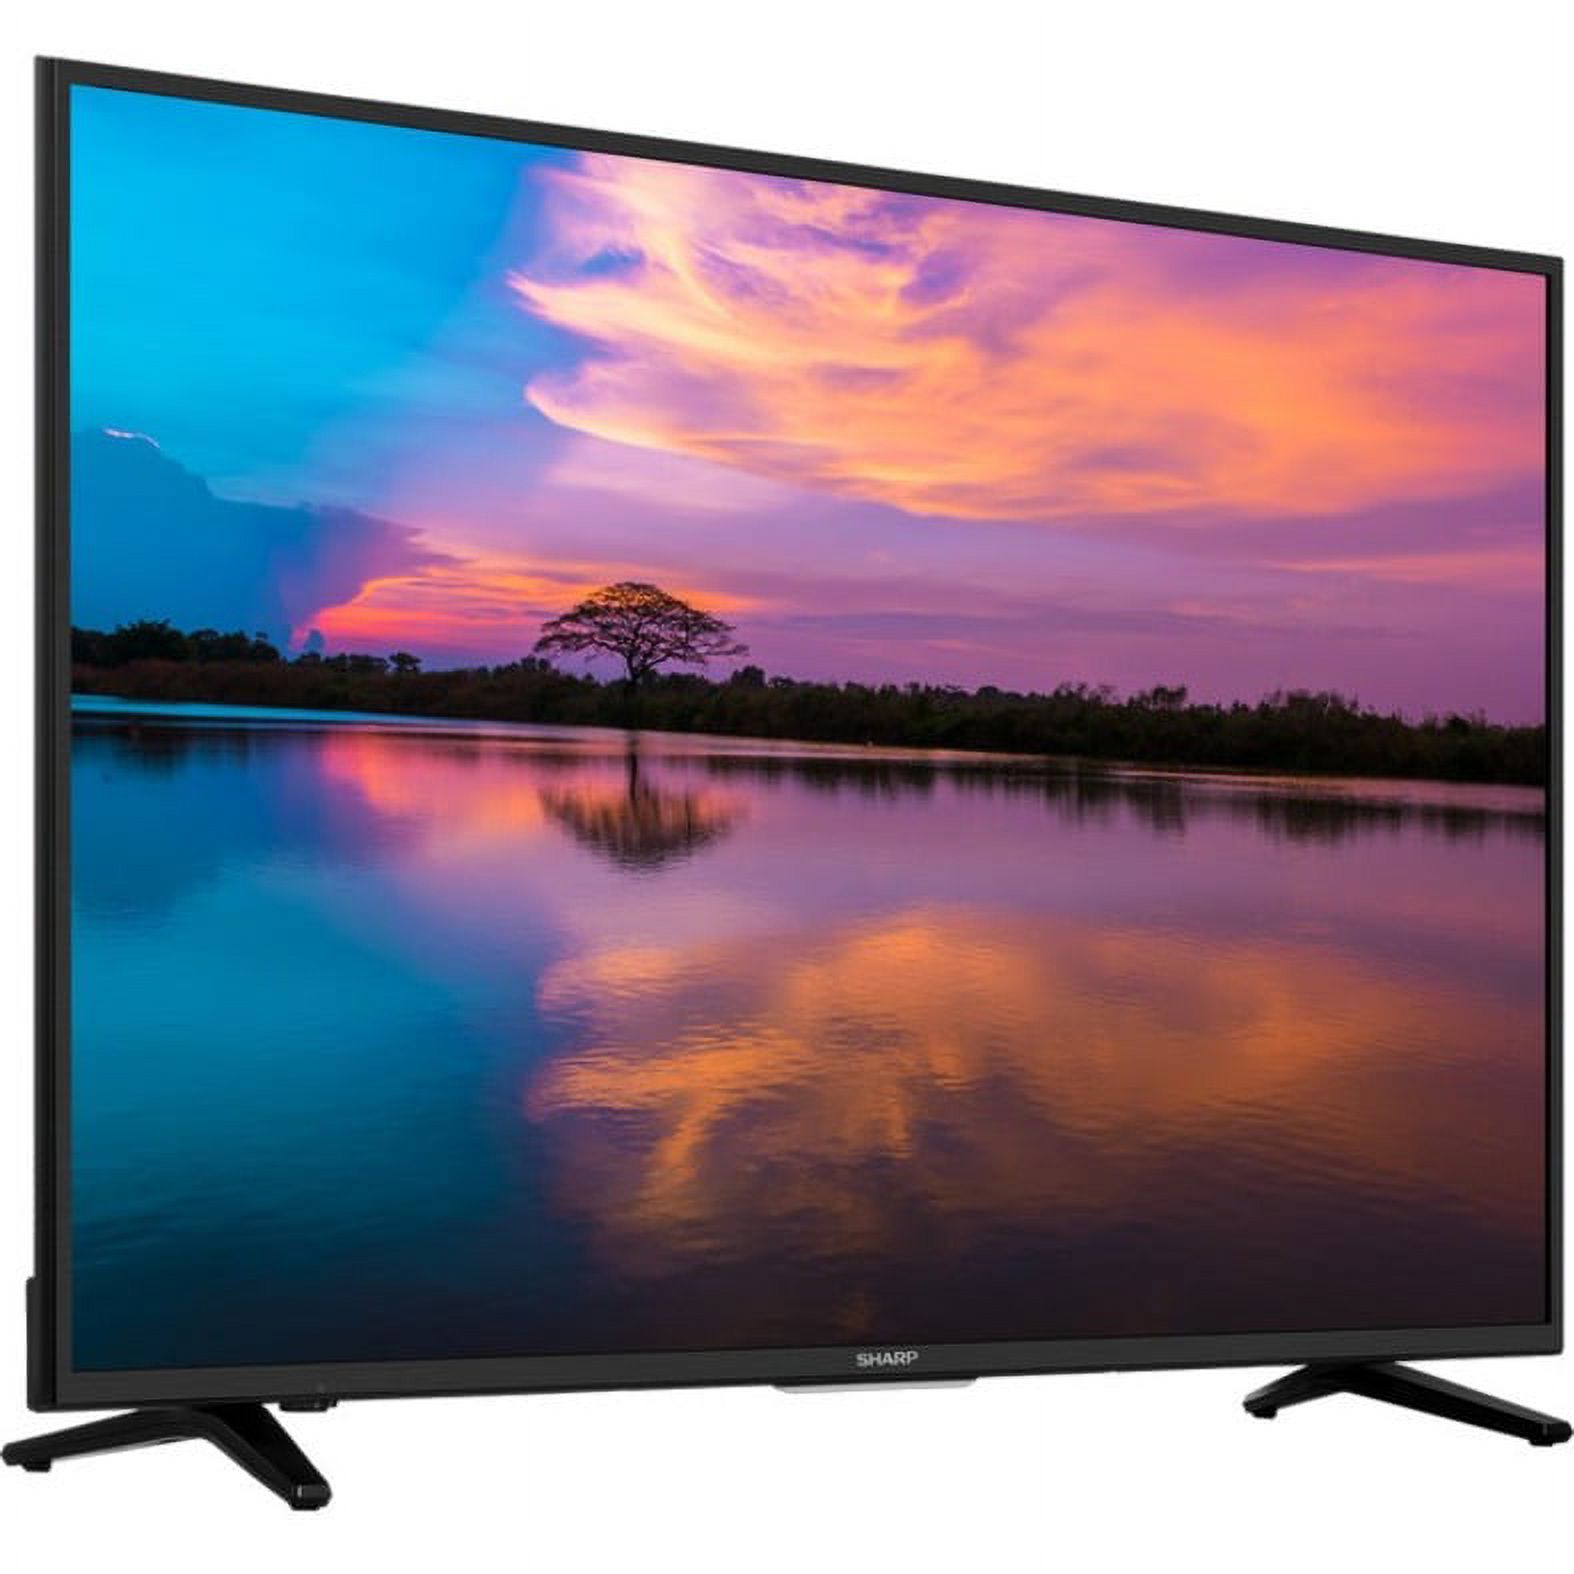 Sharp 65" Class 4K UHDTV (2160p) HDR Smart LED-LCD TV (LC-65Q7000U) - image 1 of 8